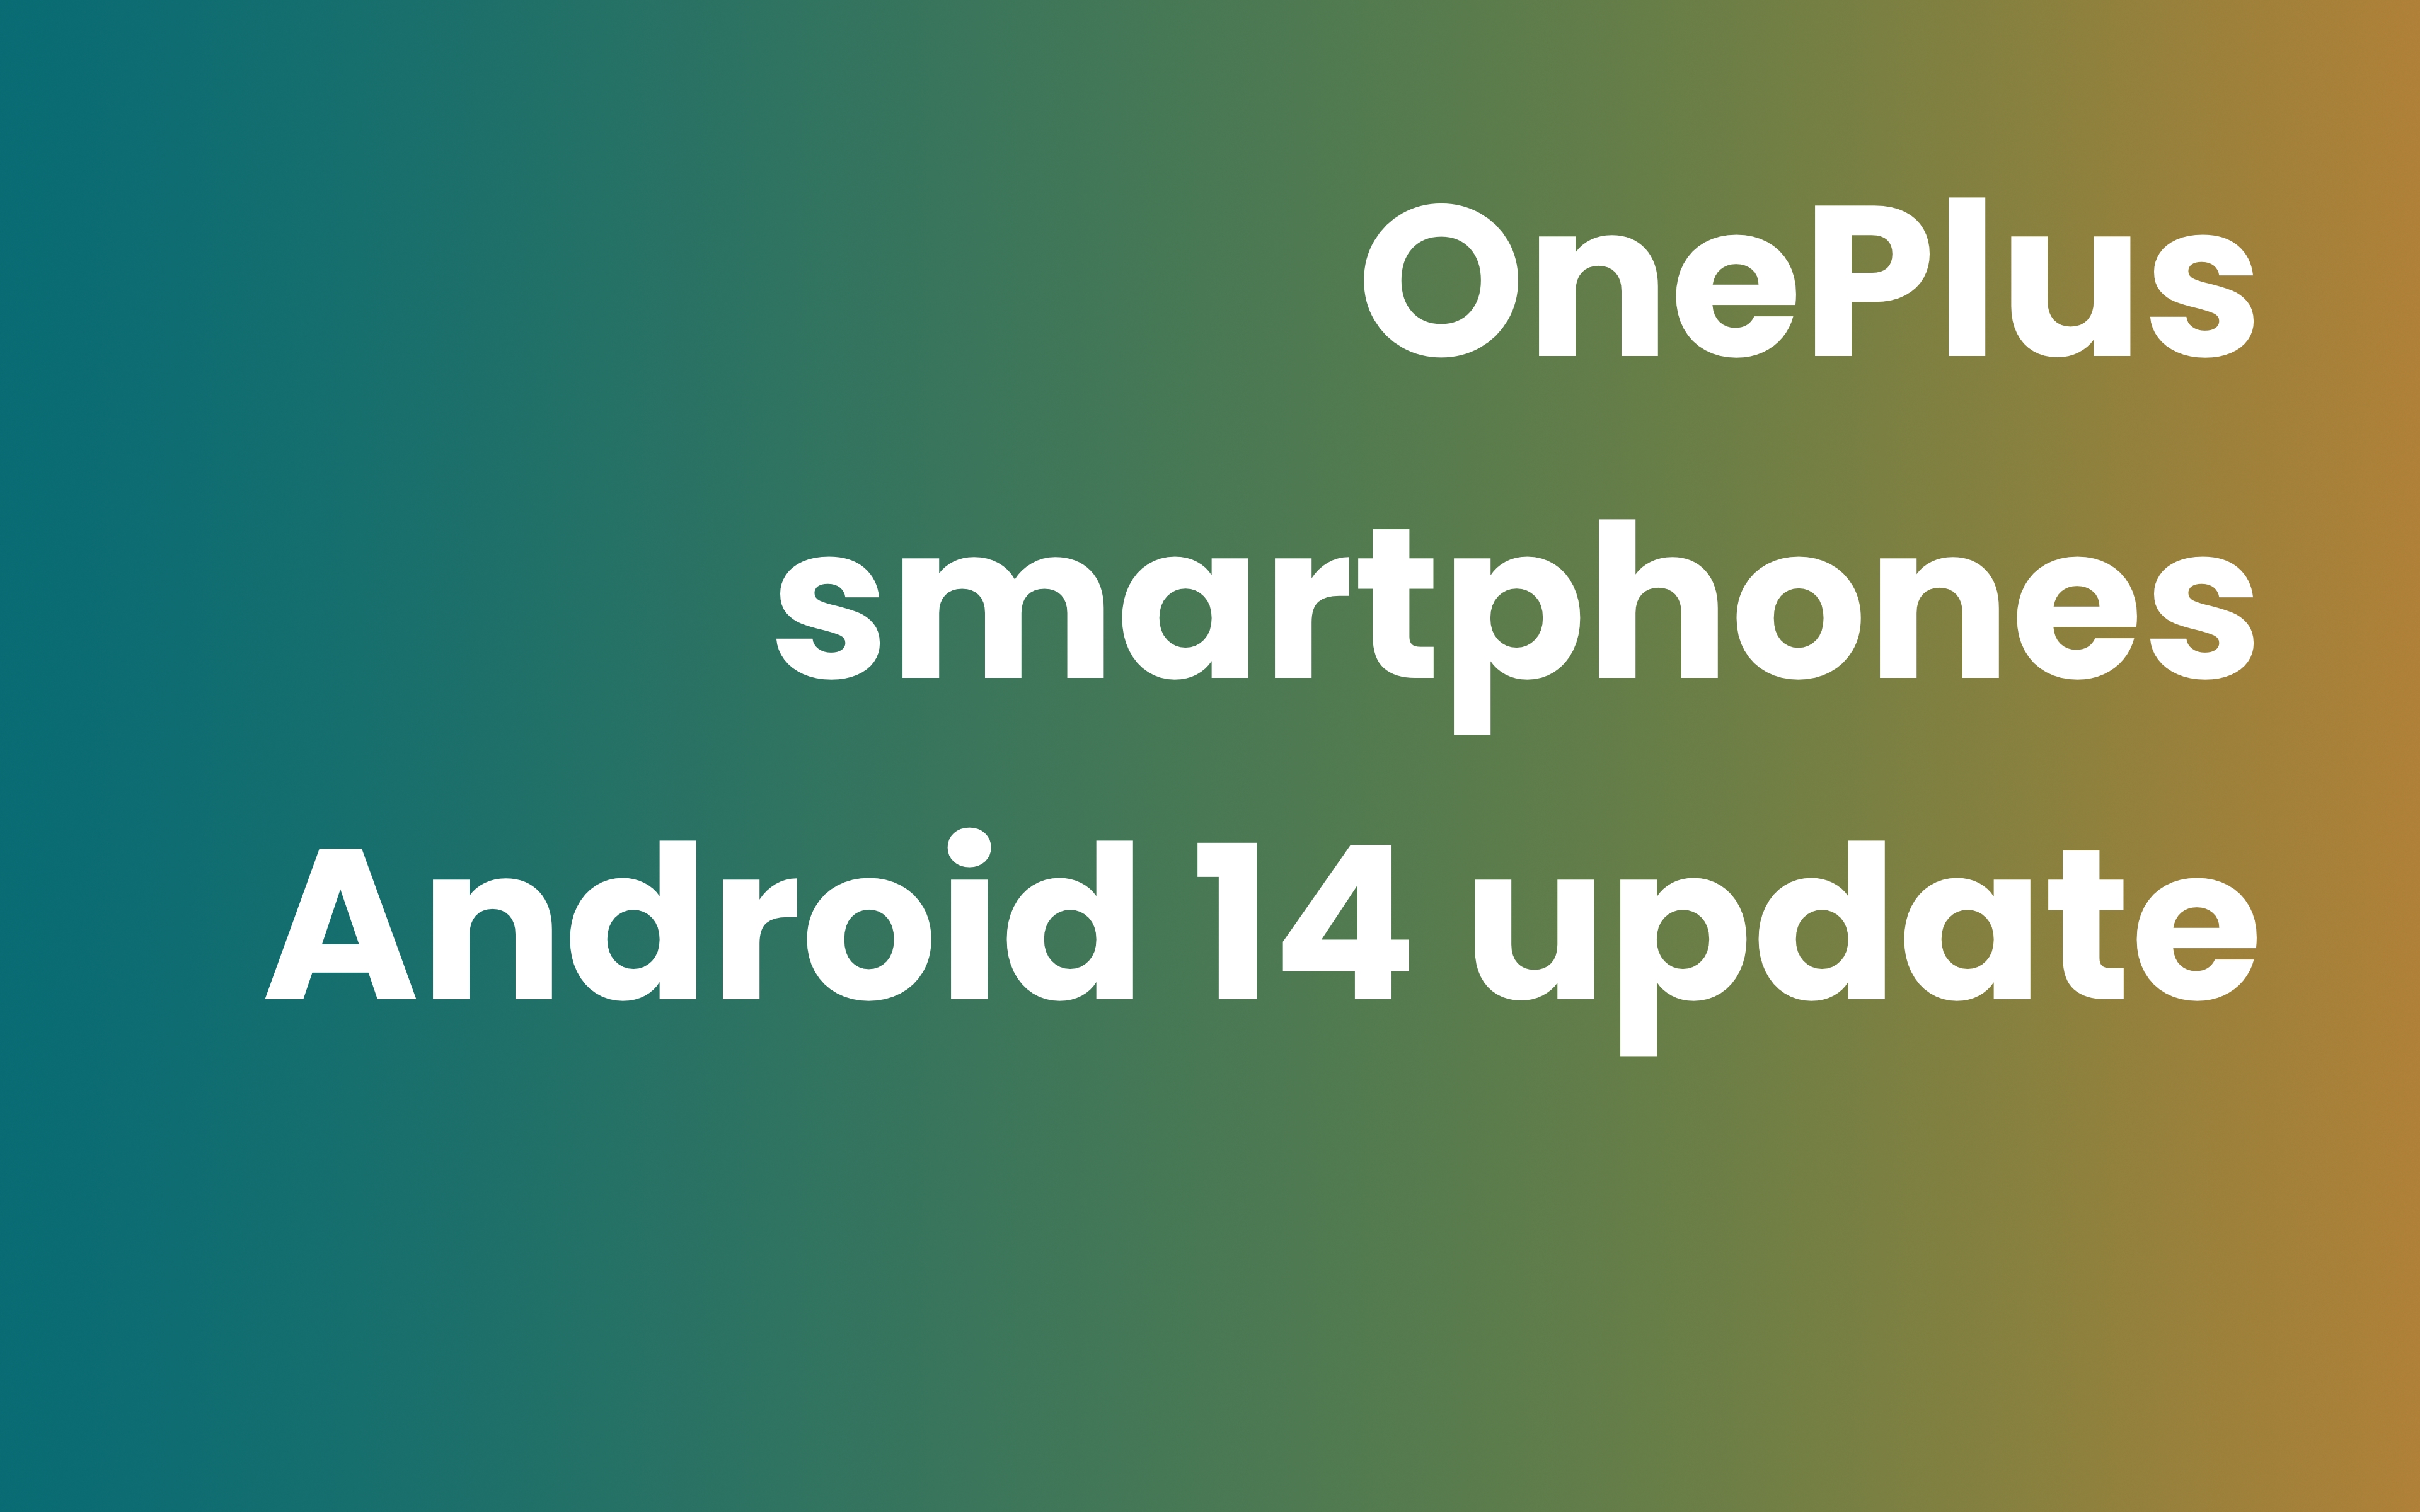 OnePlus Android 14 update smartphones